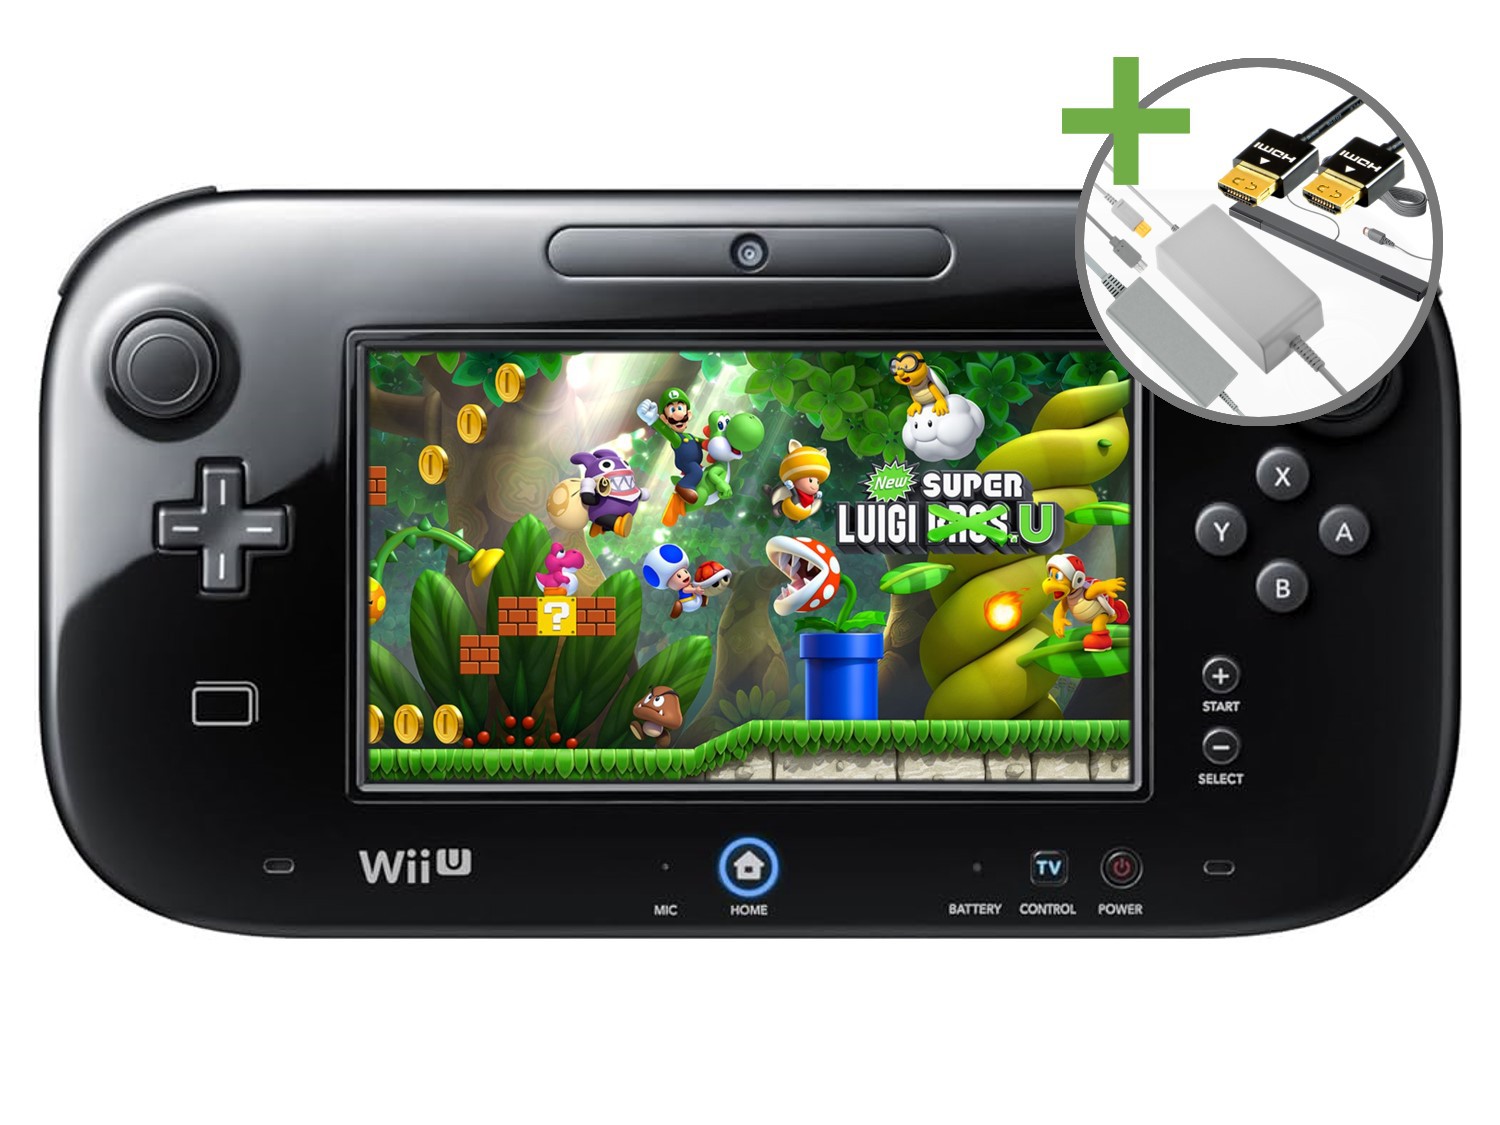 Nintendo Wii U Starter Pack - New Super Mario Bros. U + New Super Luigi U Edition - Wii U Hardware - 2